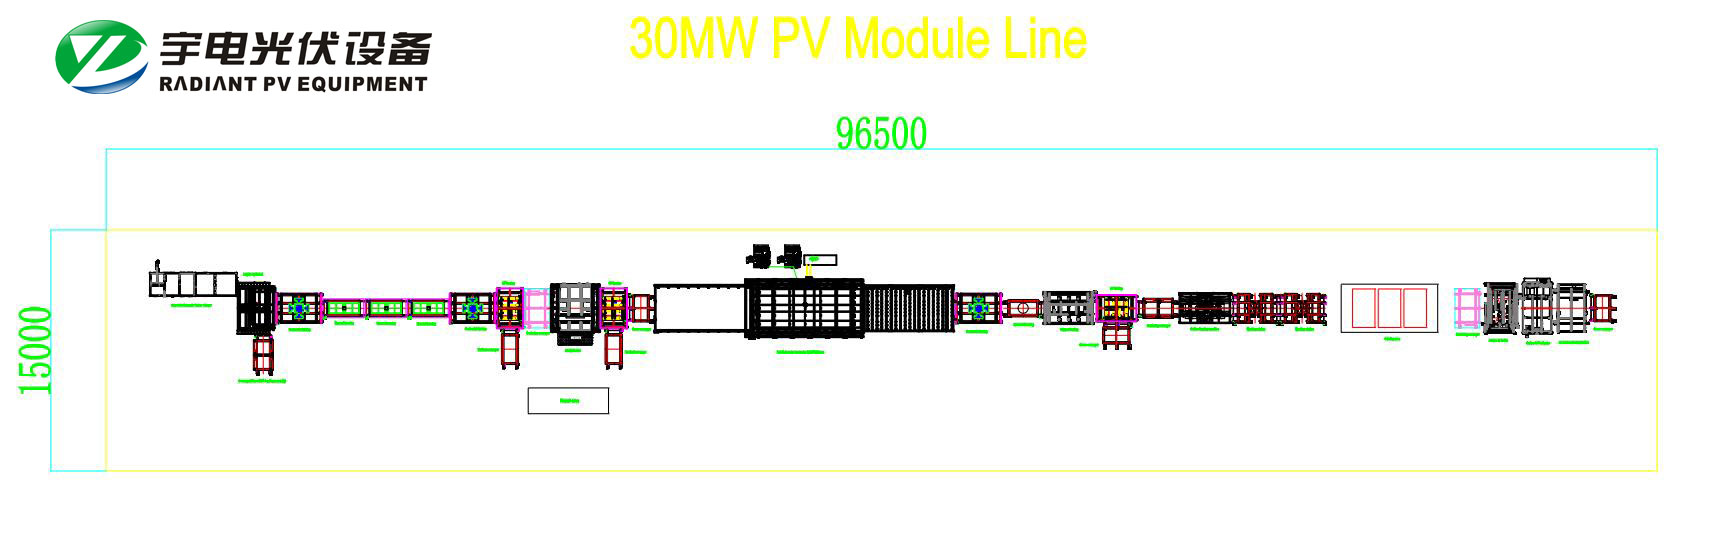 30MW-Automatic-Pv-Module-Line-Drawing.jpg